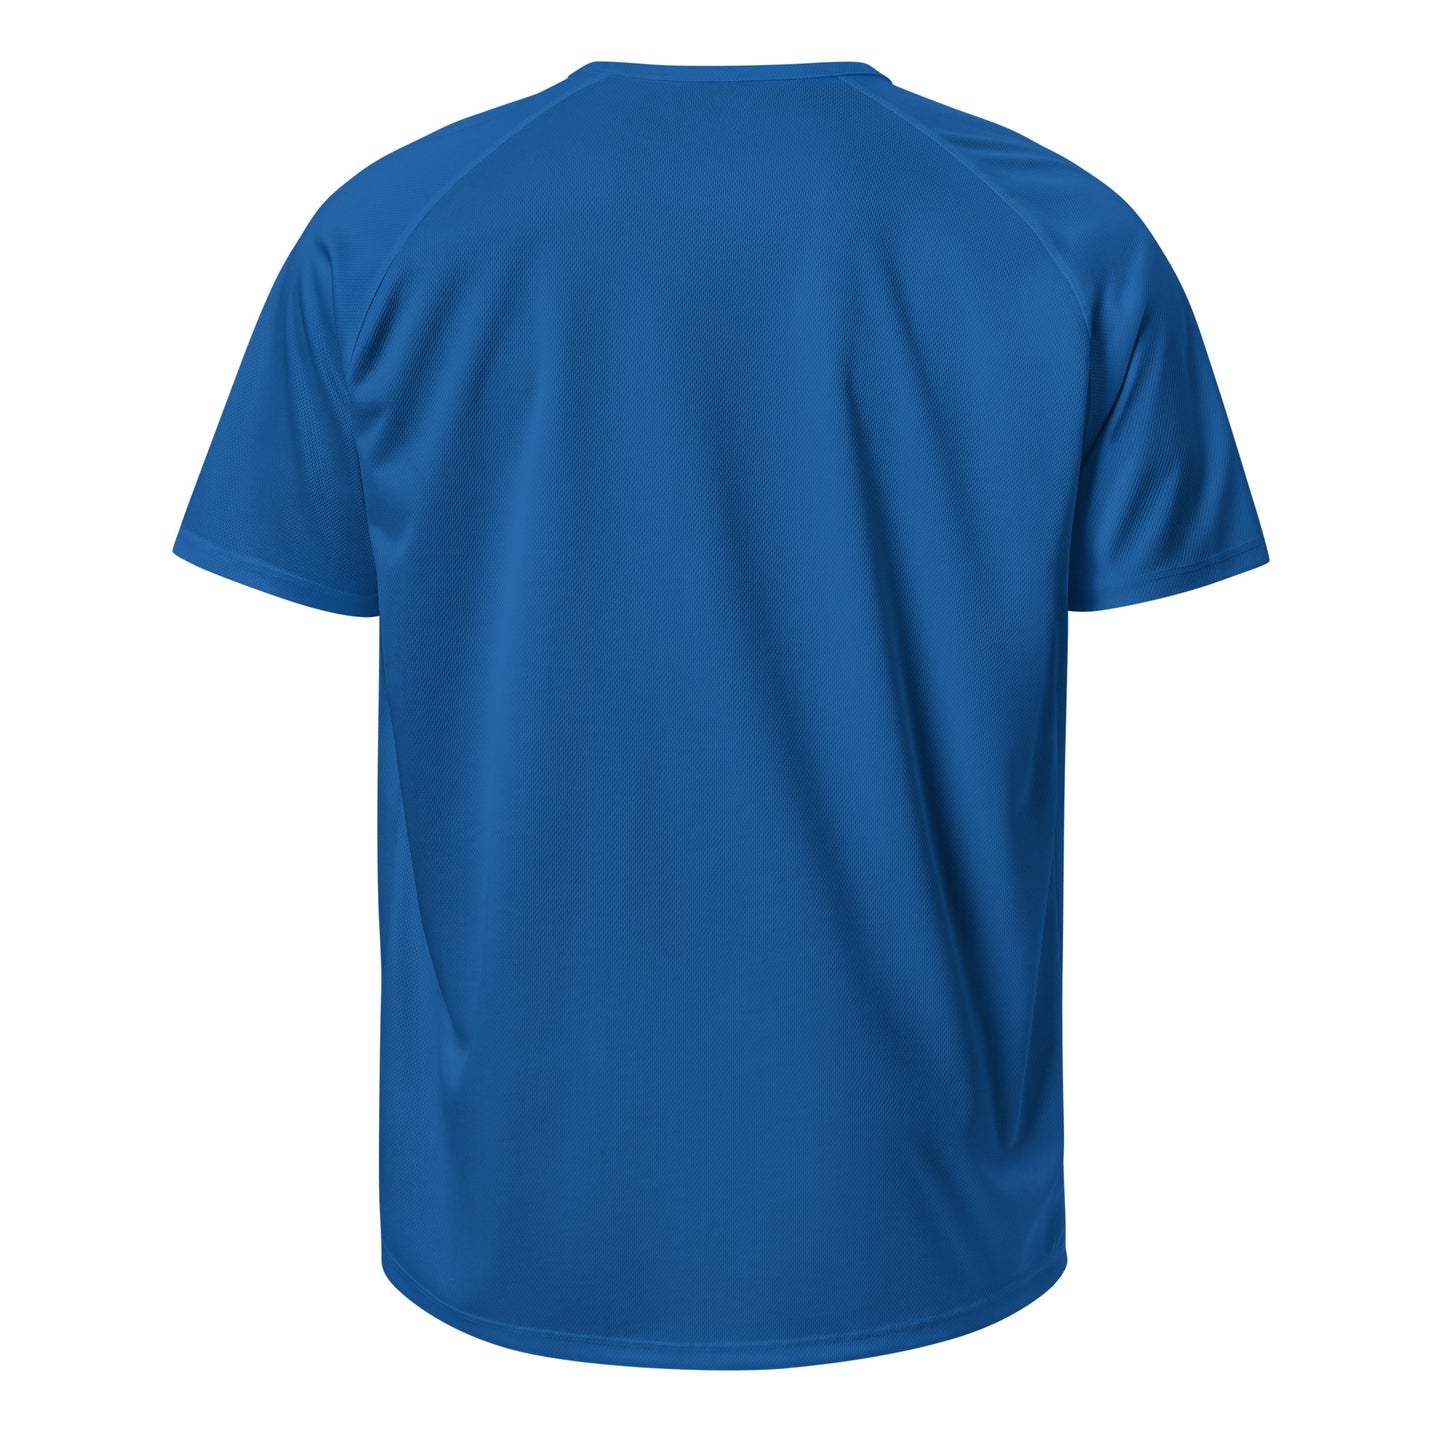 M103 - T-shirt/Sports/Breathable Fabric (Pony : Blue)